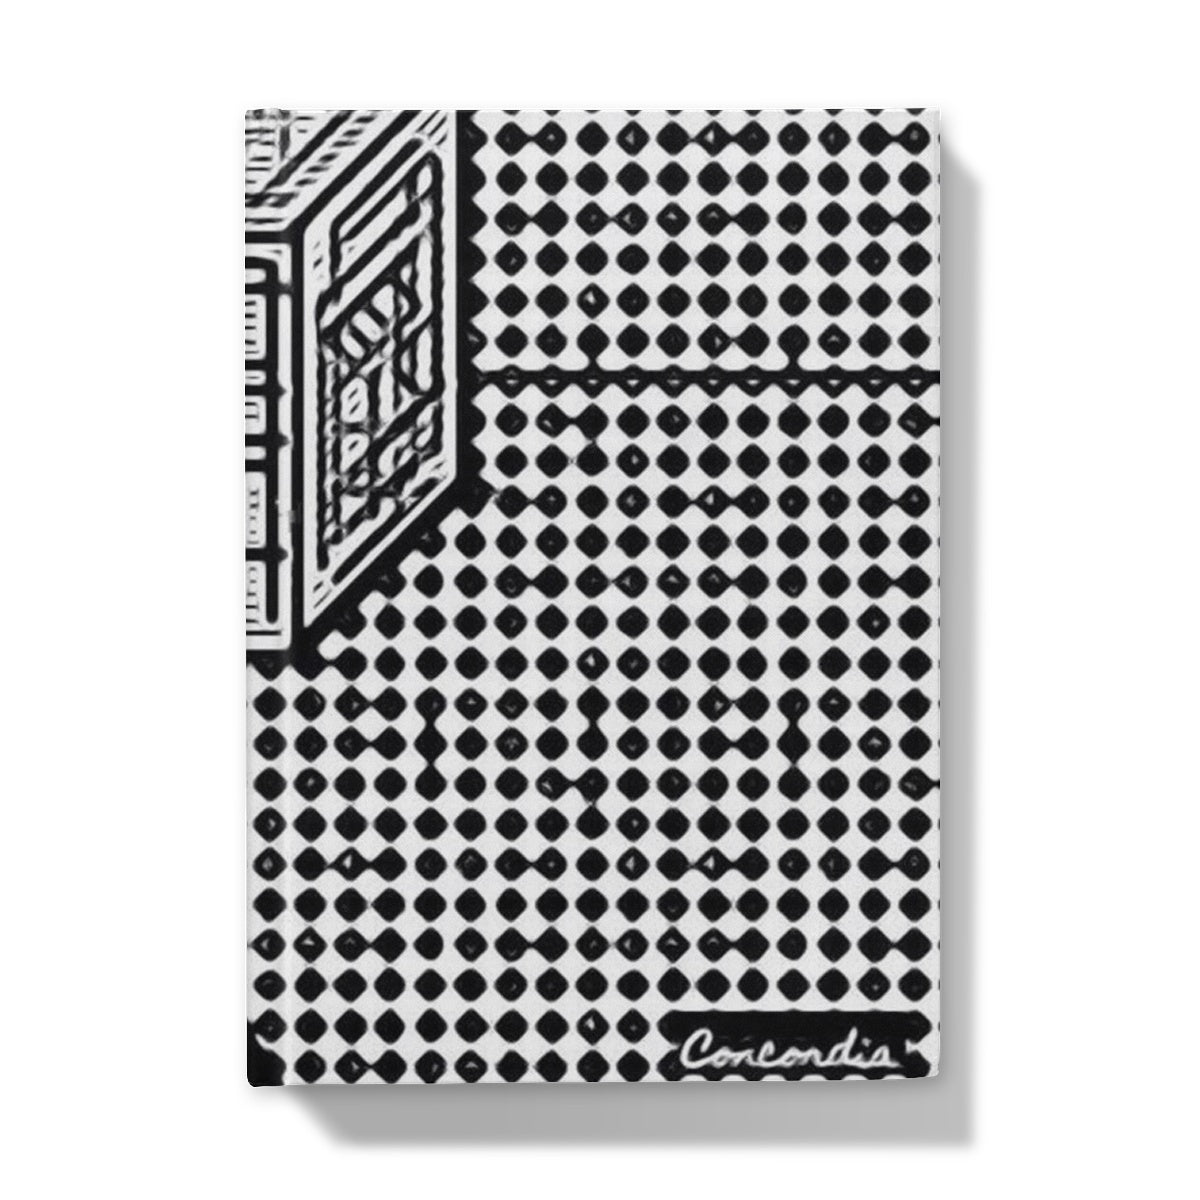 The Cube Hardback Journal